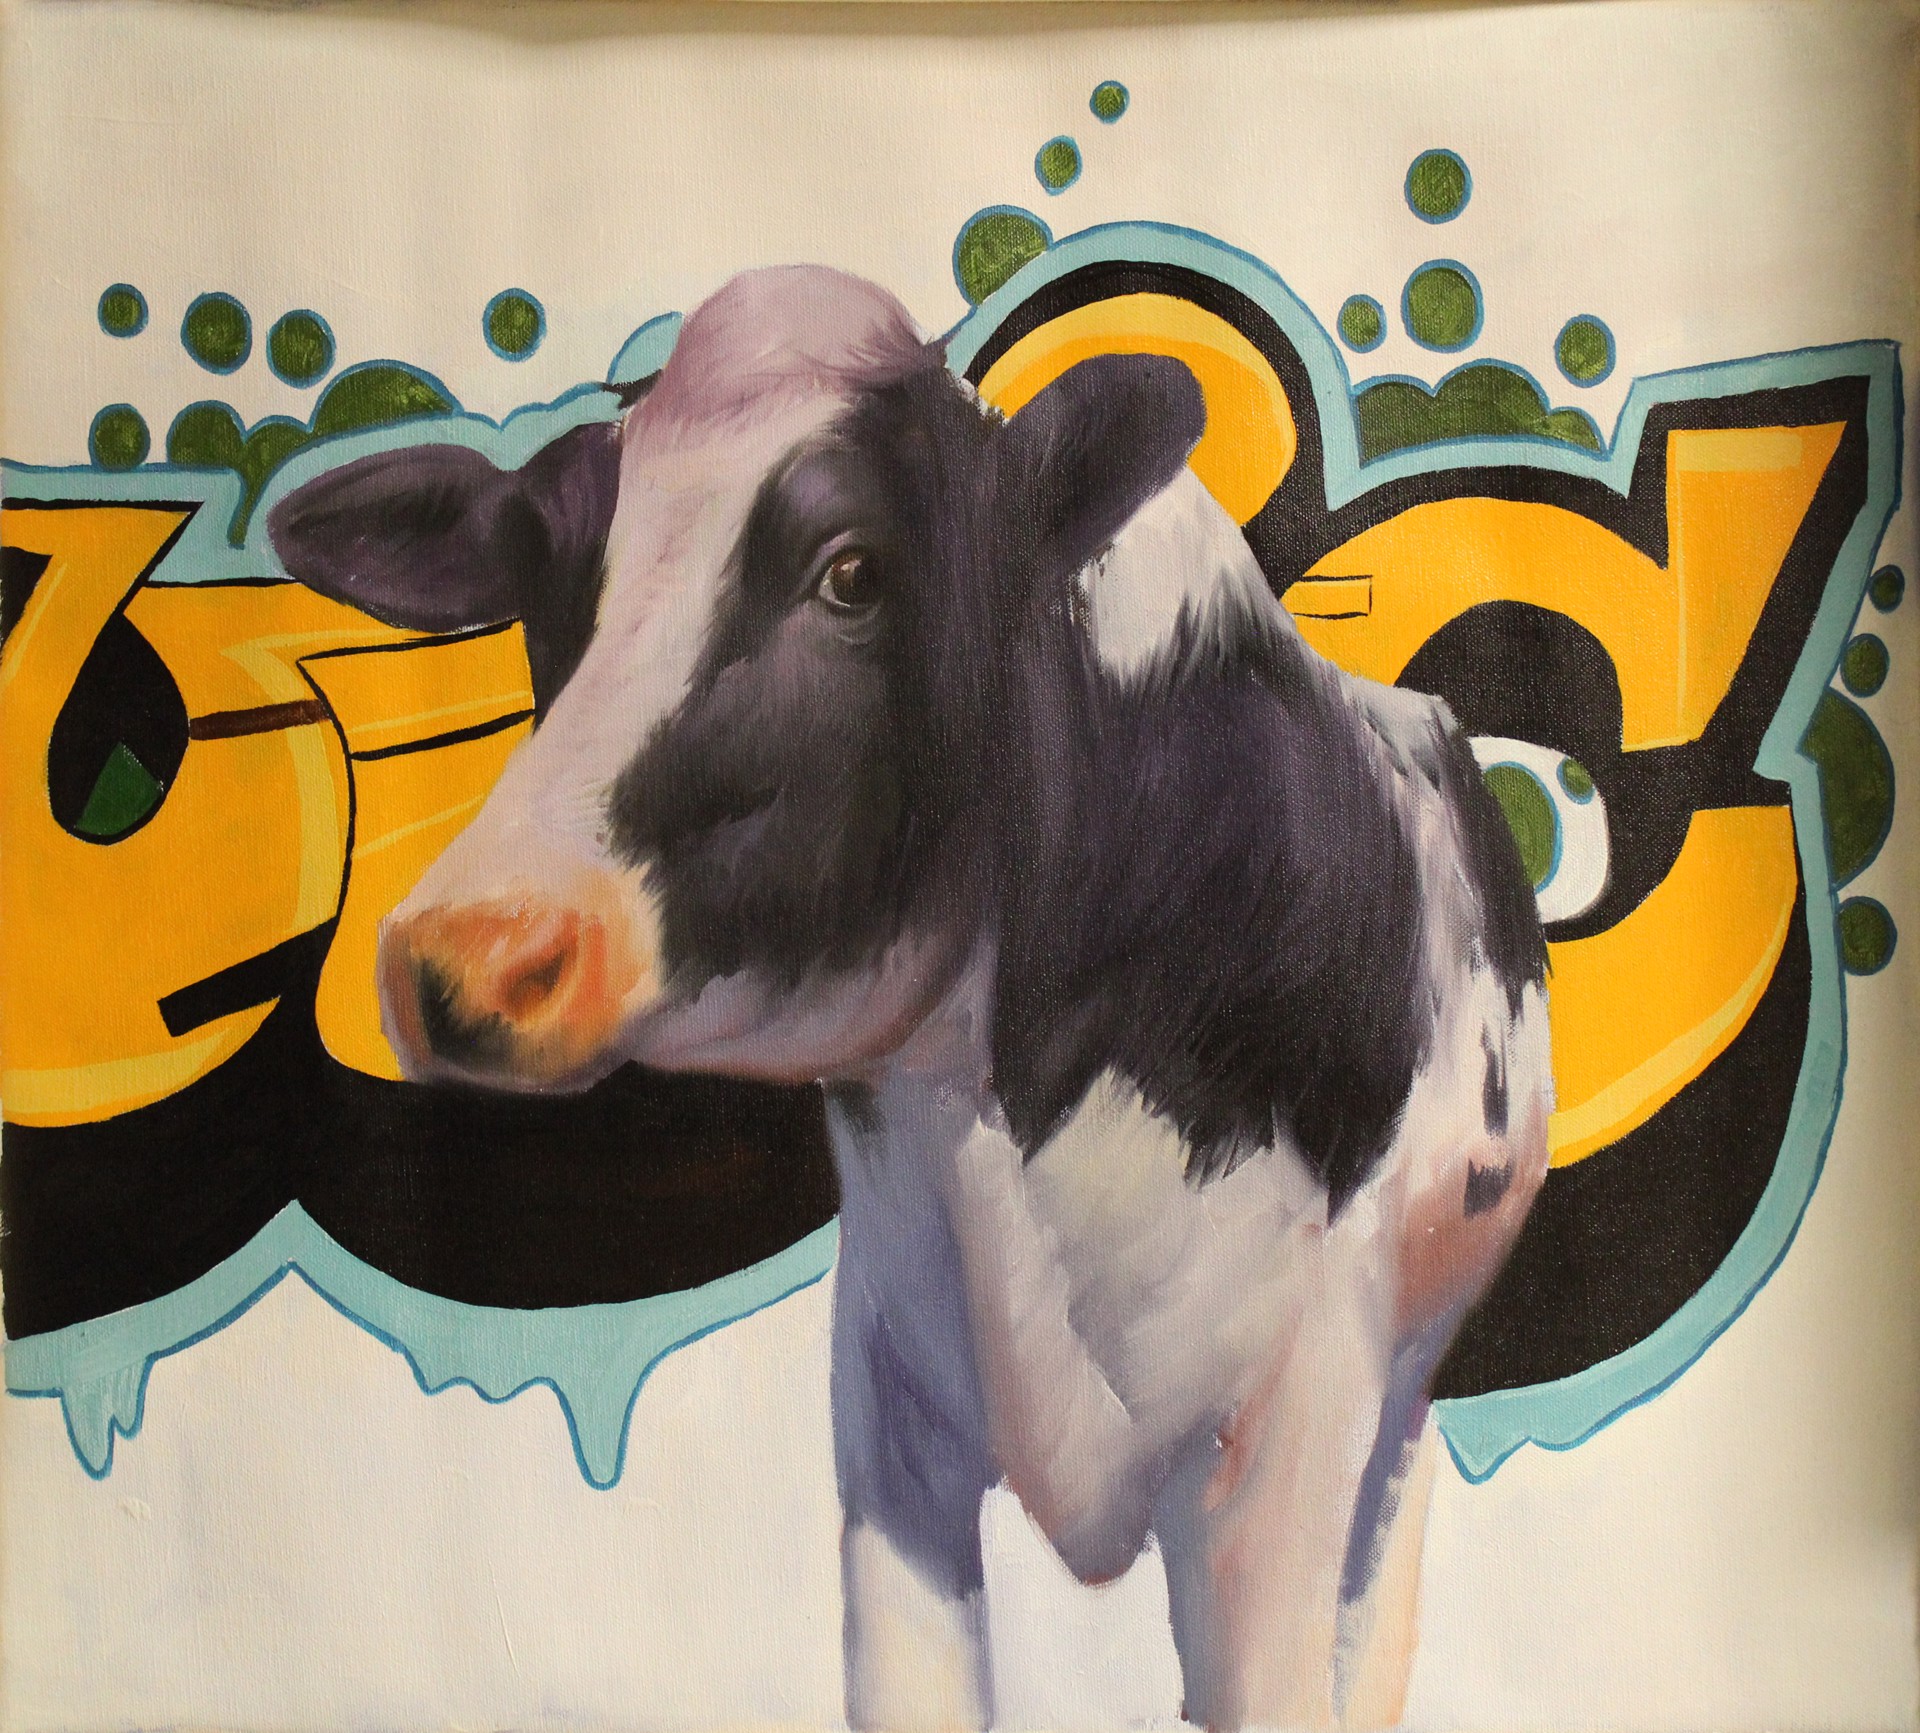 Vaca by Ali Ghassan